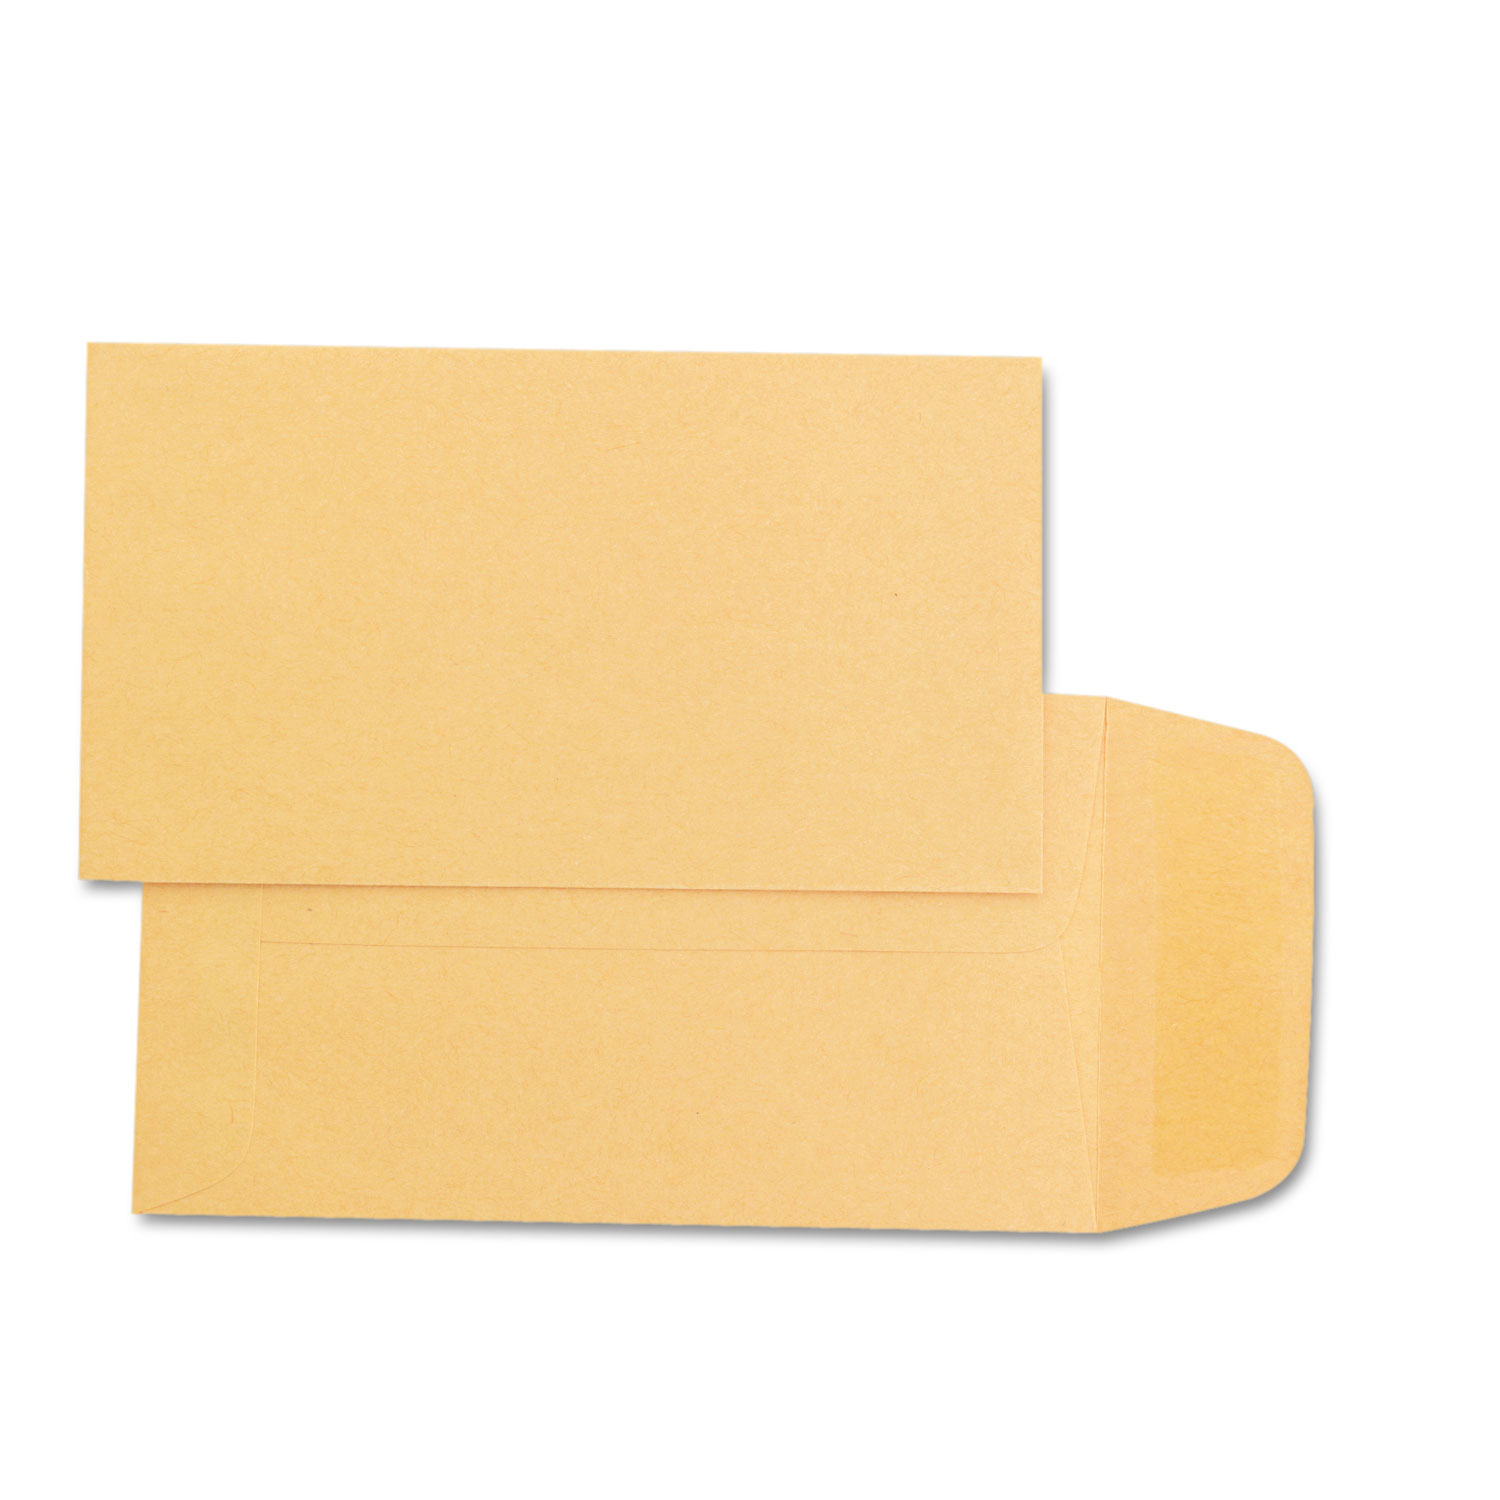 Kraft Coin & Small Parts Envelope, #1, 2 1/4 x 3 1/2, Brown Kraft, 500/Box